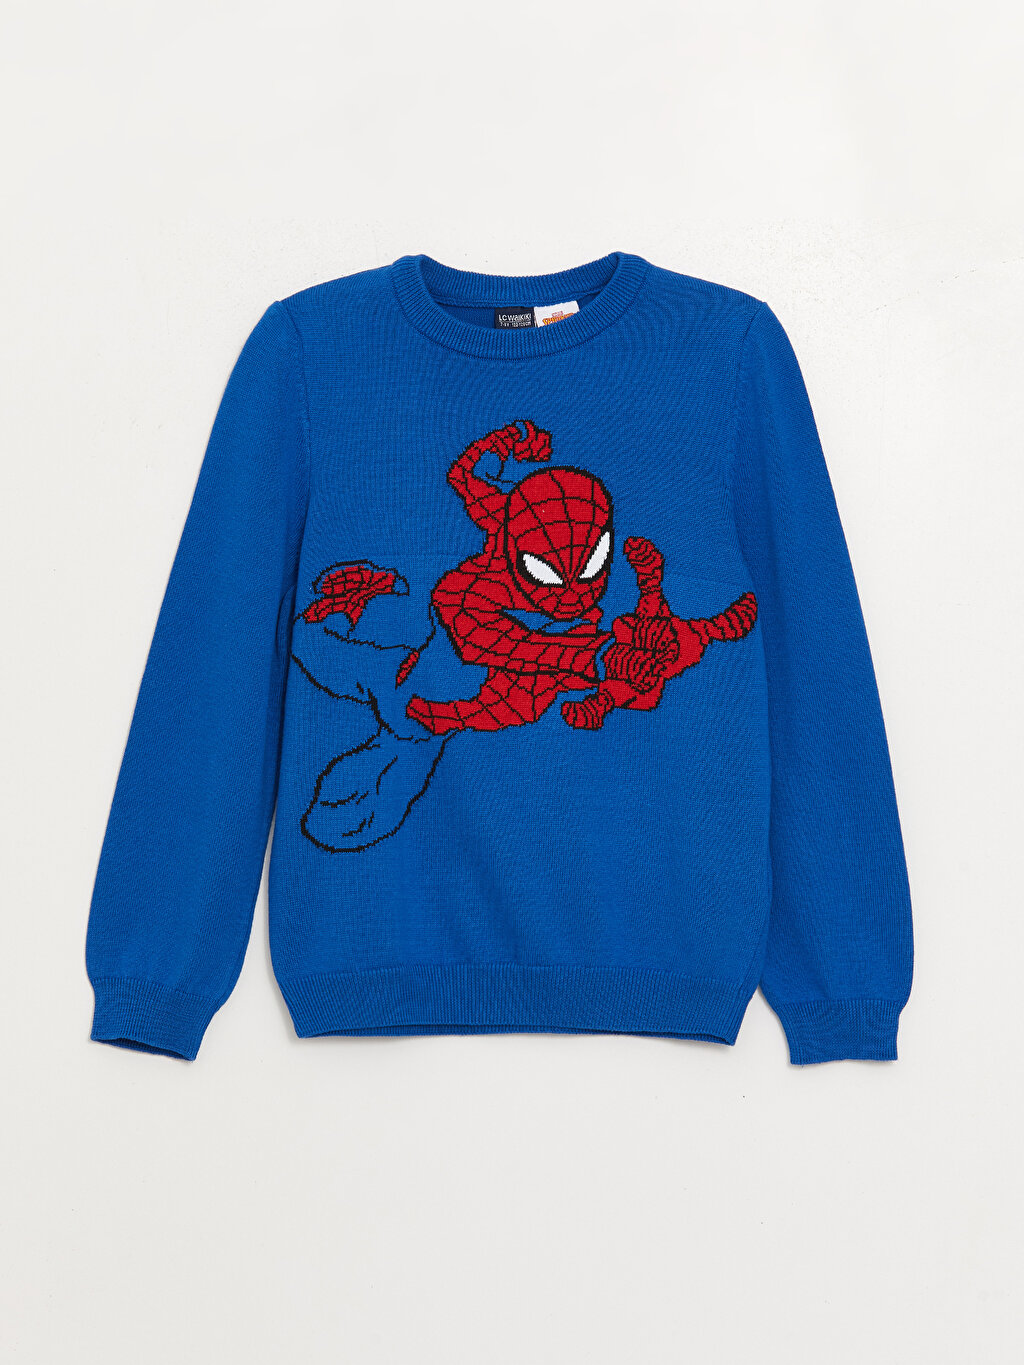 Вязаный свитер для мальчика с круглым вырезом и рисунком Человек паук  -W36281Z4-JUF - W36281Z4-JUF - LC Waikiki